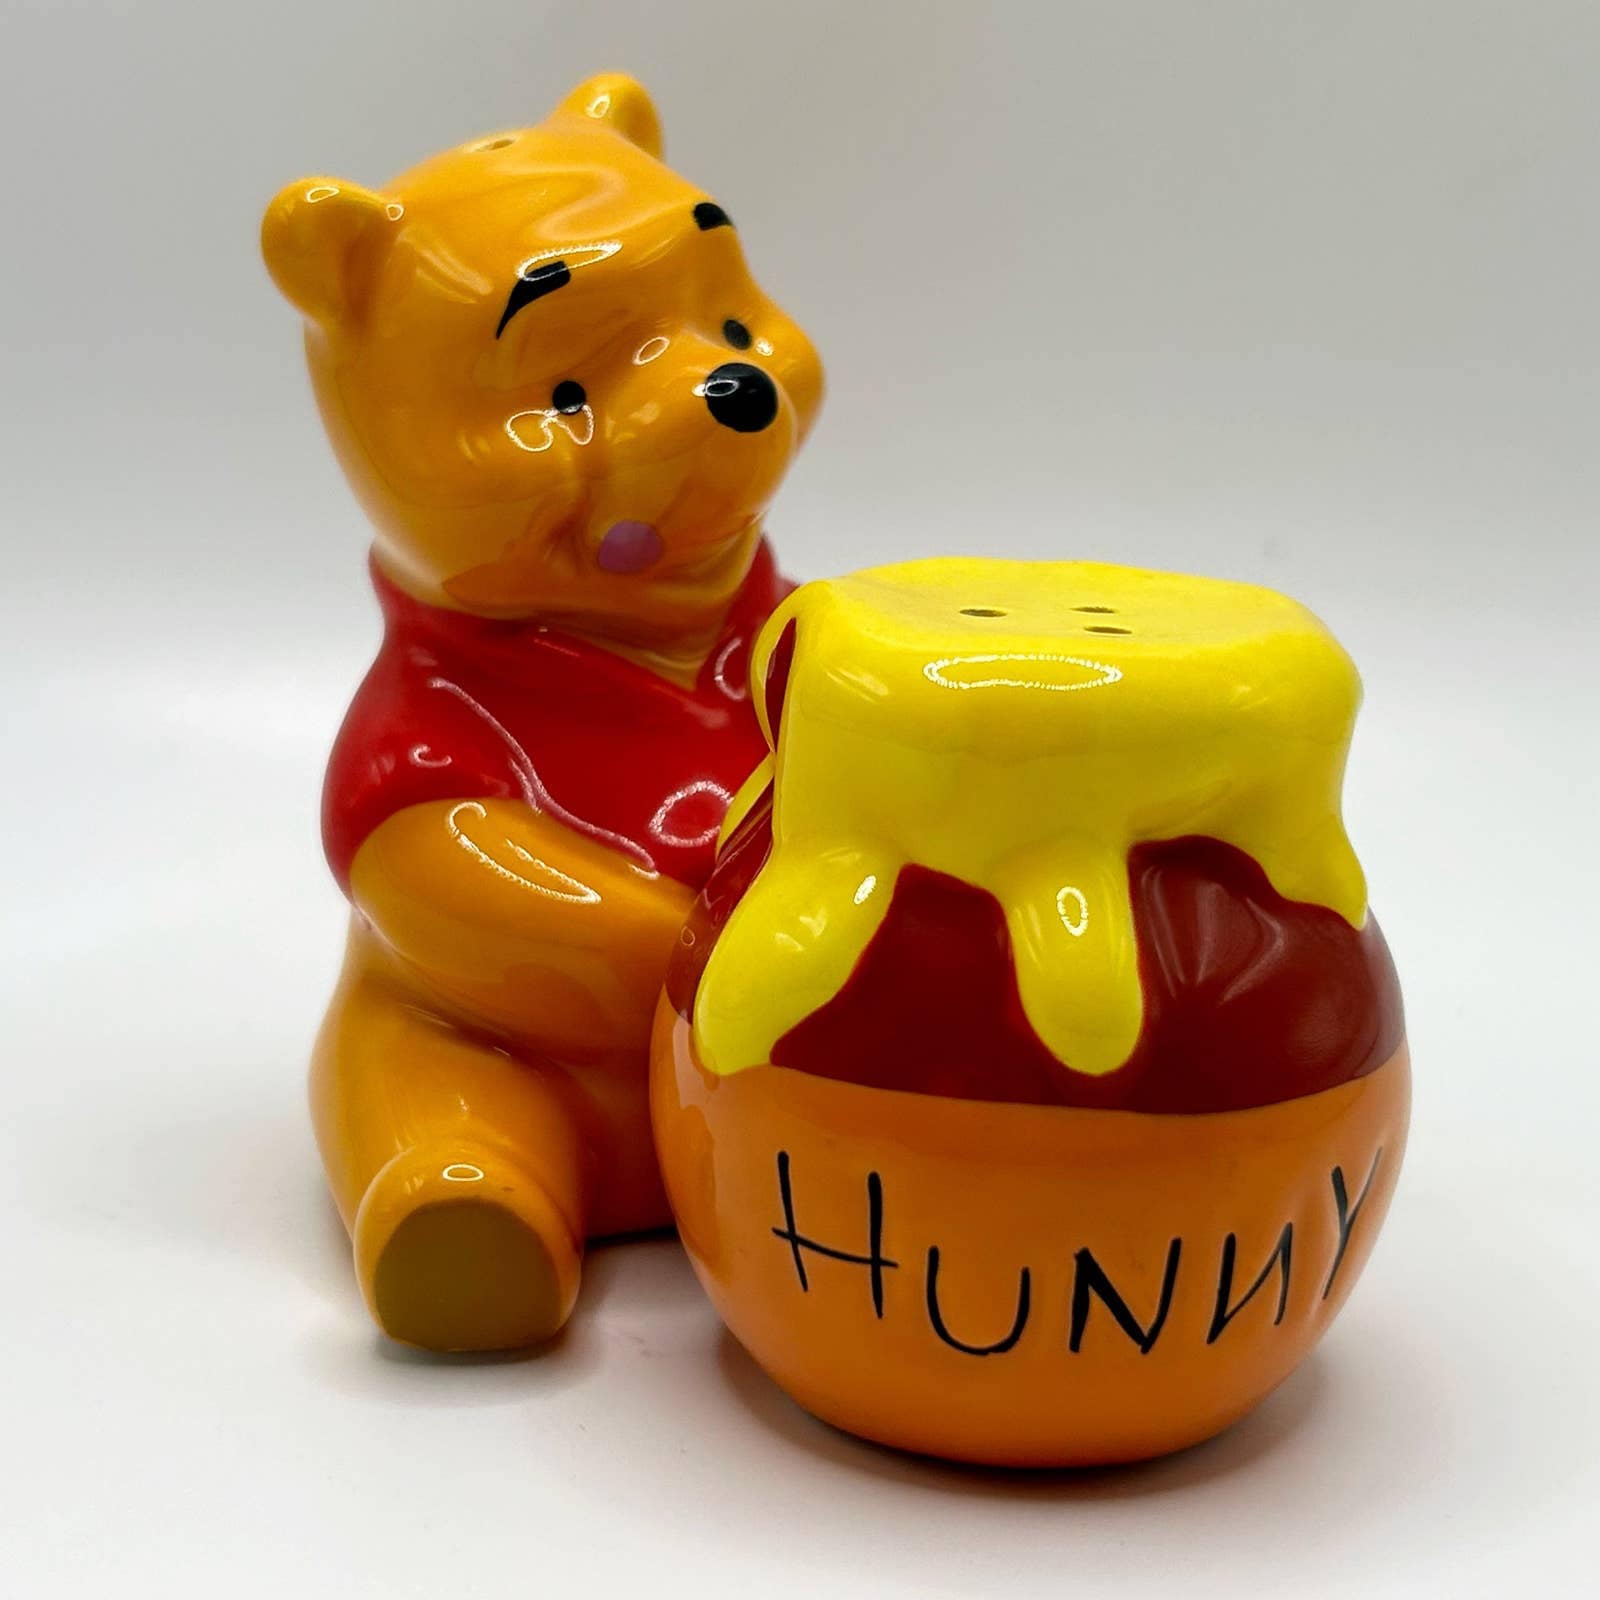 Disney Winnie The Pooh and Hunny Pot Shelf Sitter Decor - Chunky Wood Block  Cutout for Kids' Bedroom, Play Room or Nursery